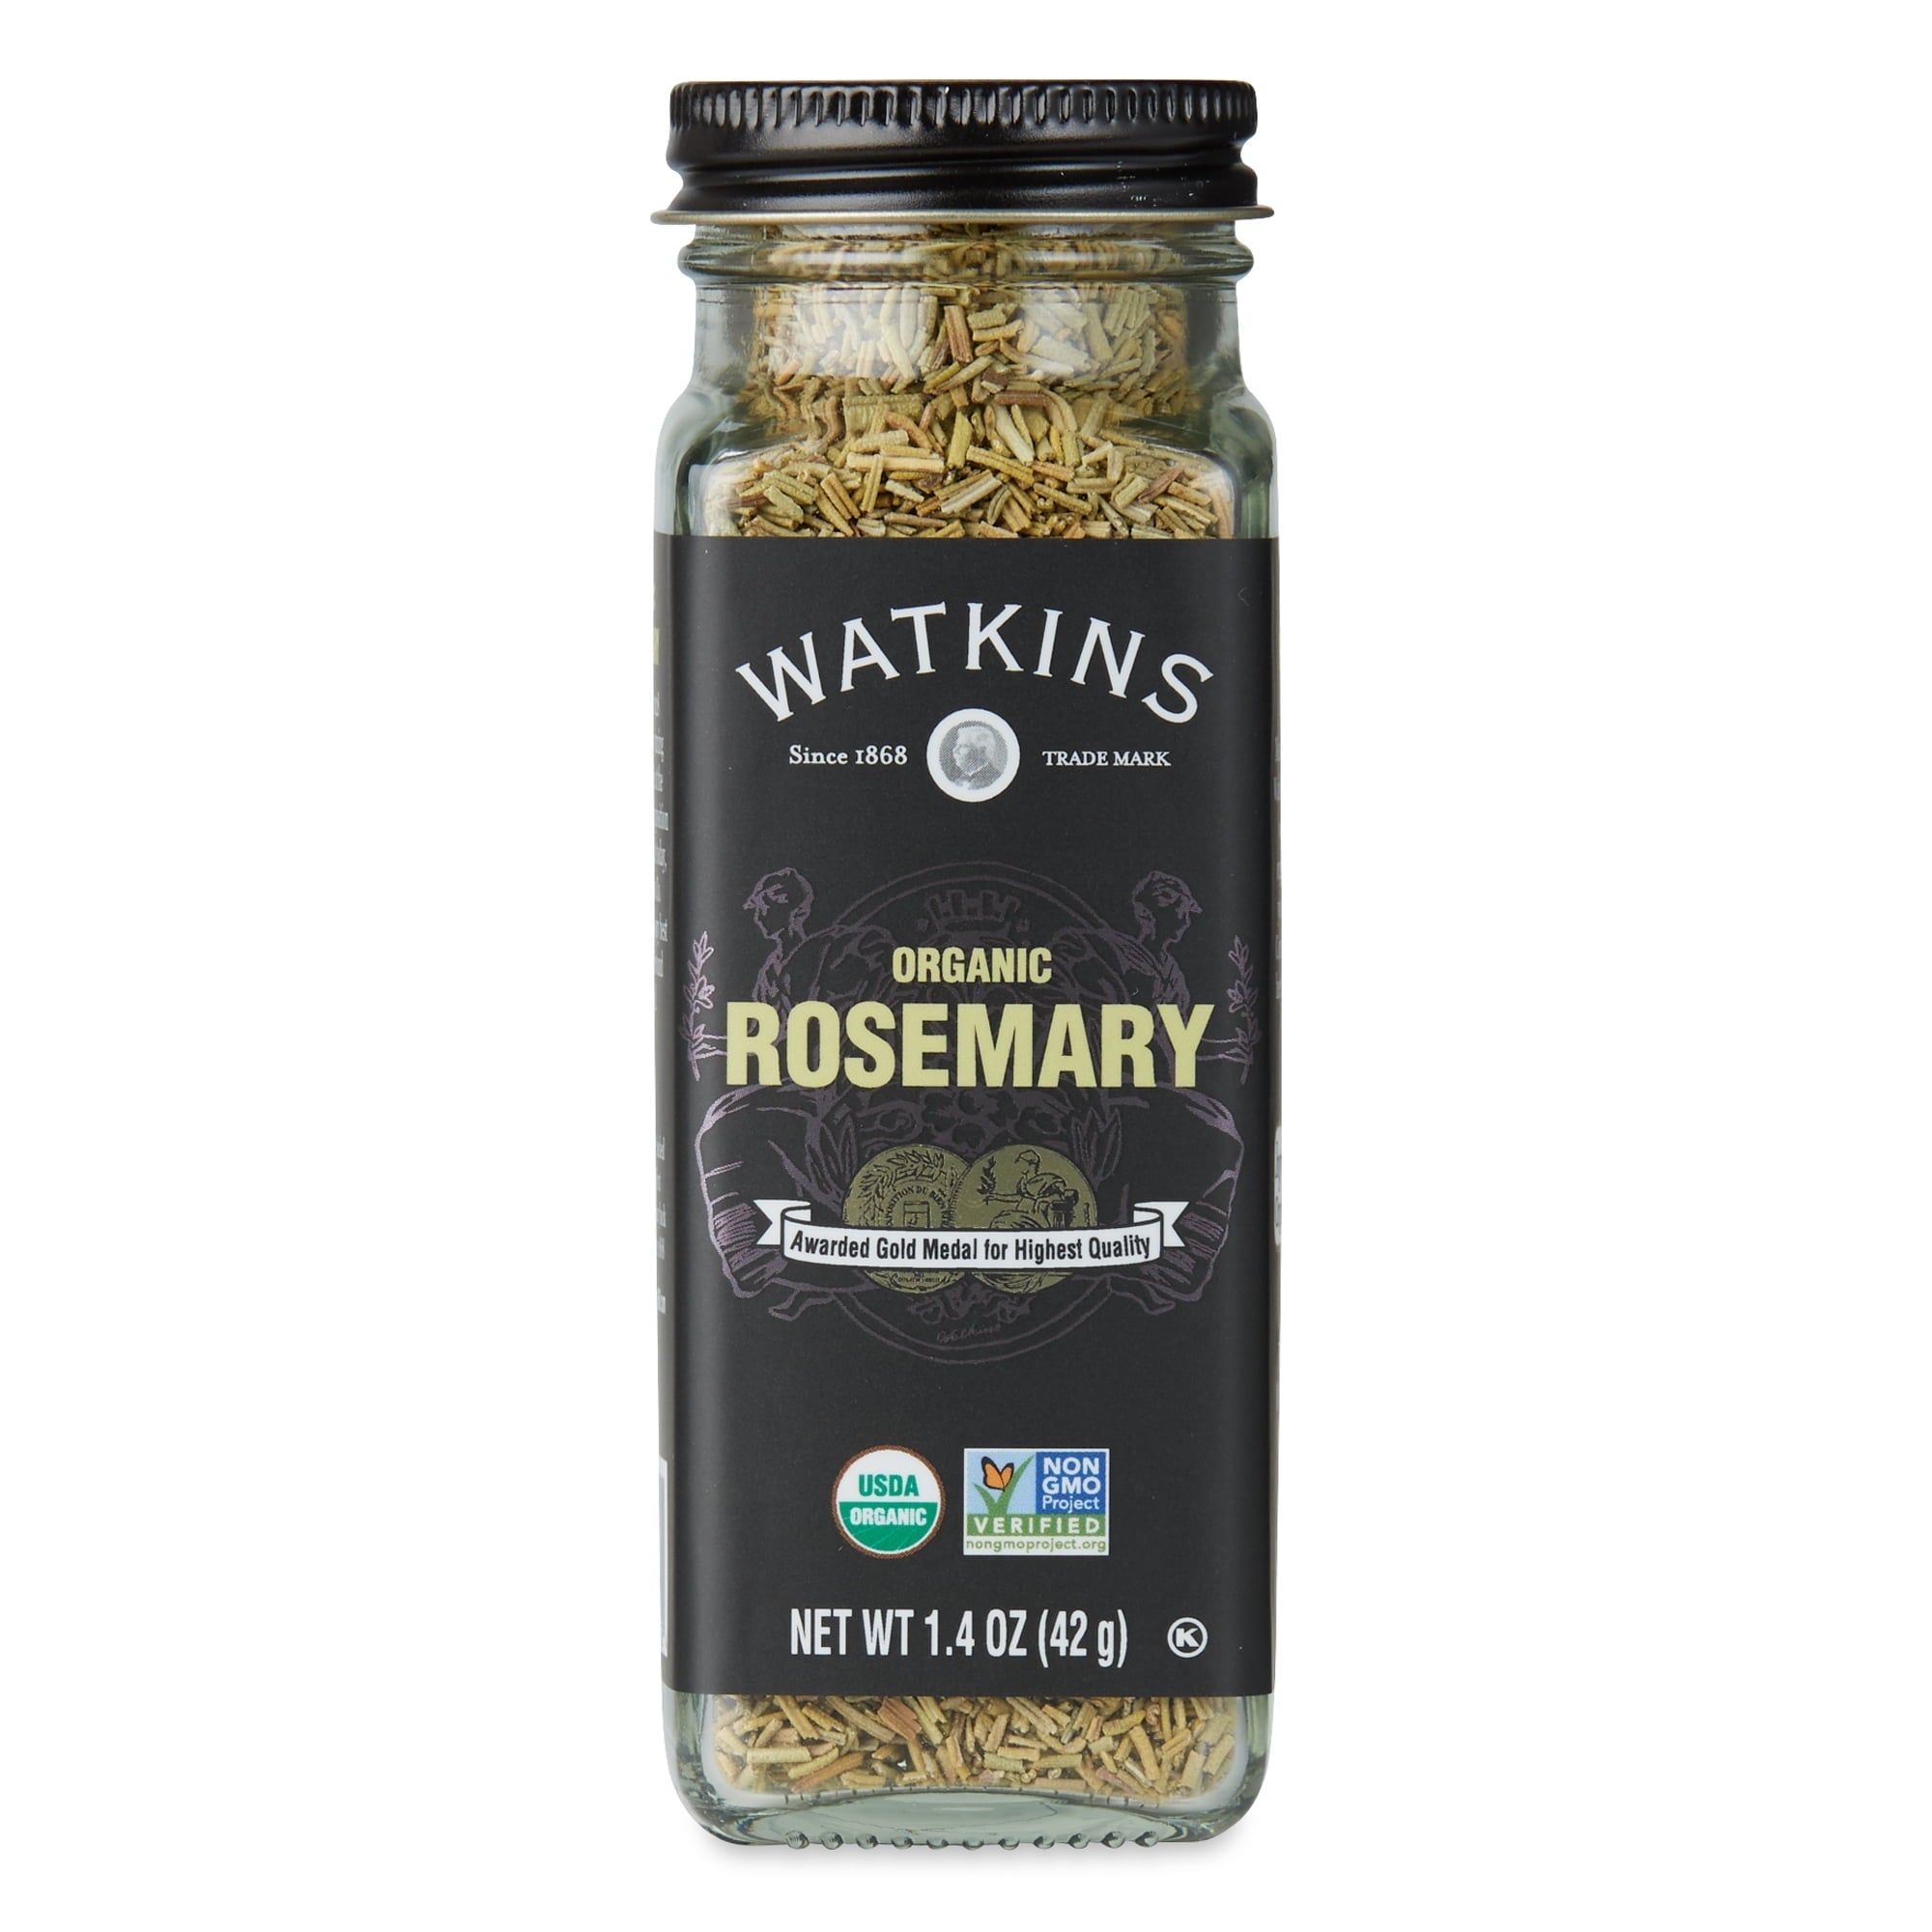 Watkins Organic Rosemary 1.4 oz Bag